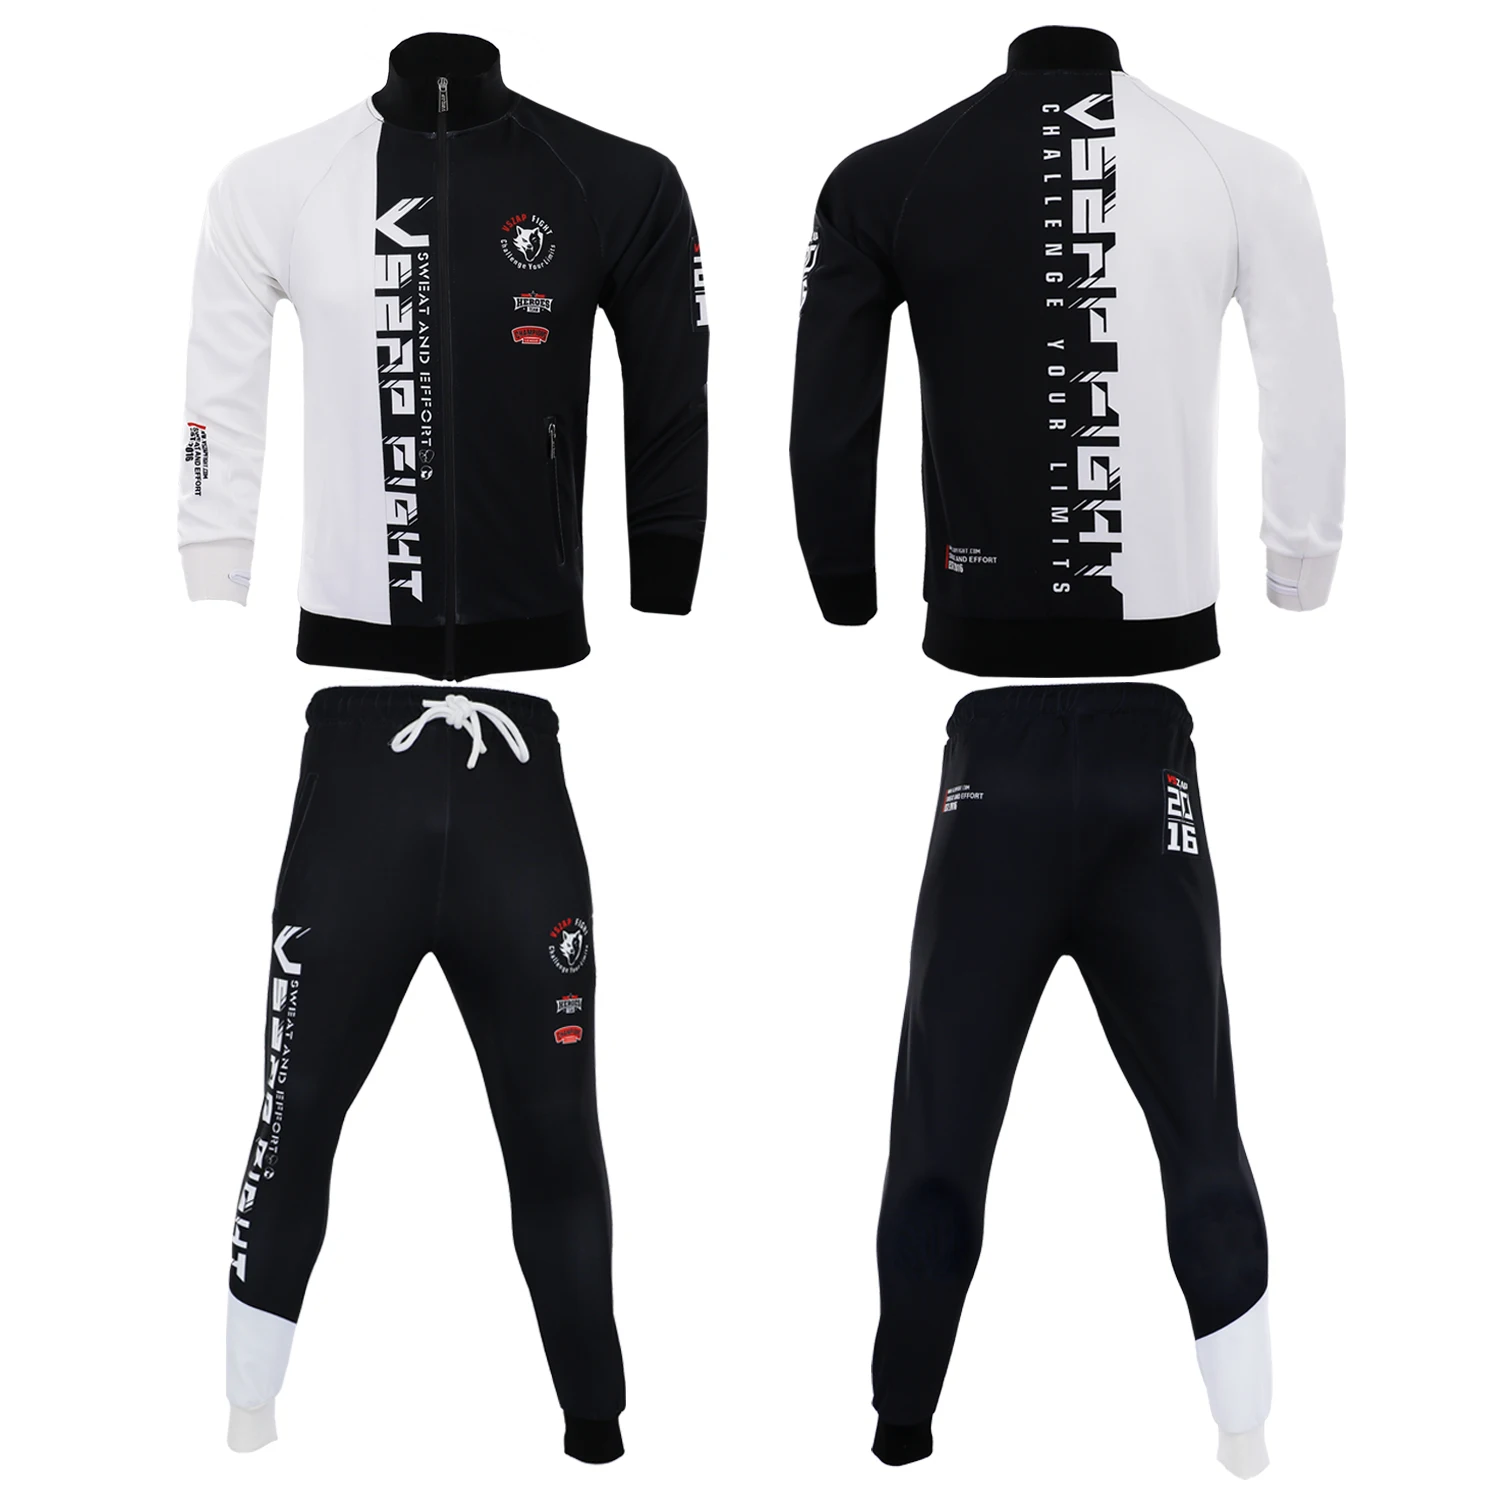 

Black white stitching stand neck zipper jacket MMA combat Thai boxing training martial arts jujitsu fitness fishing cycling suit